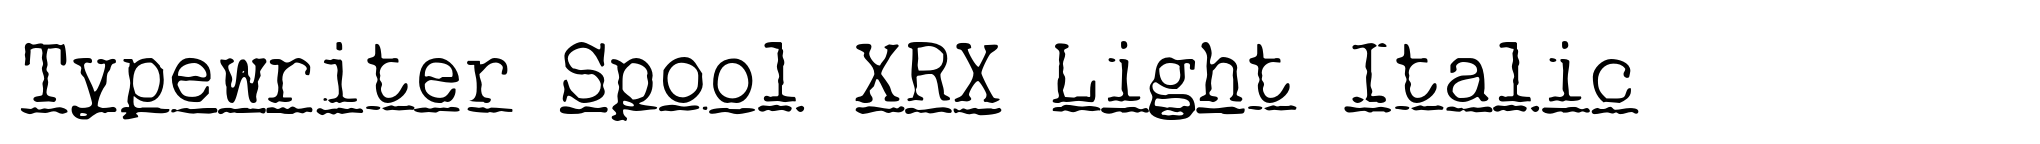 Typewriter Spool XRX Light Italic image